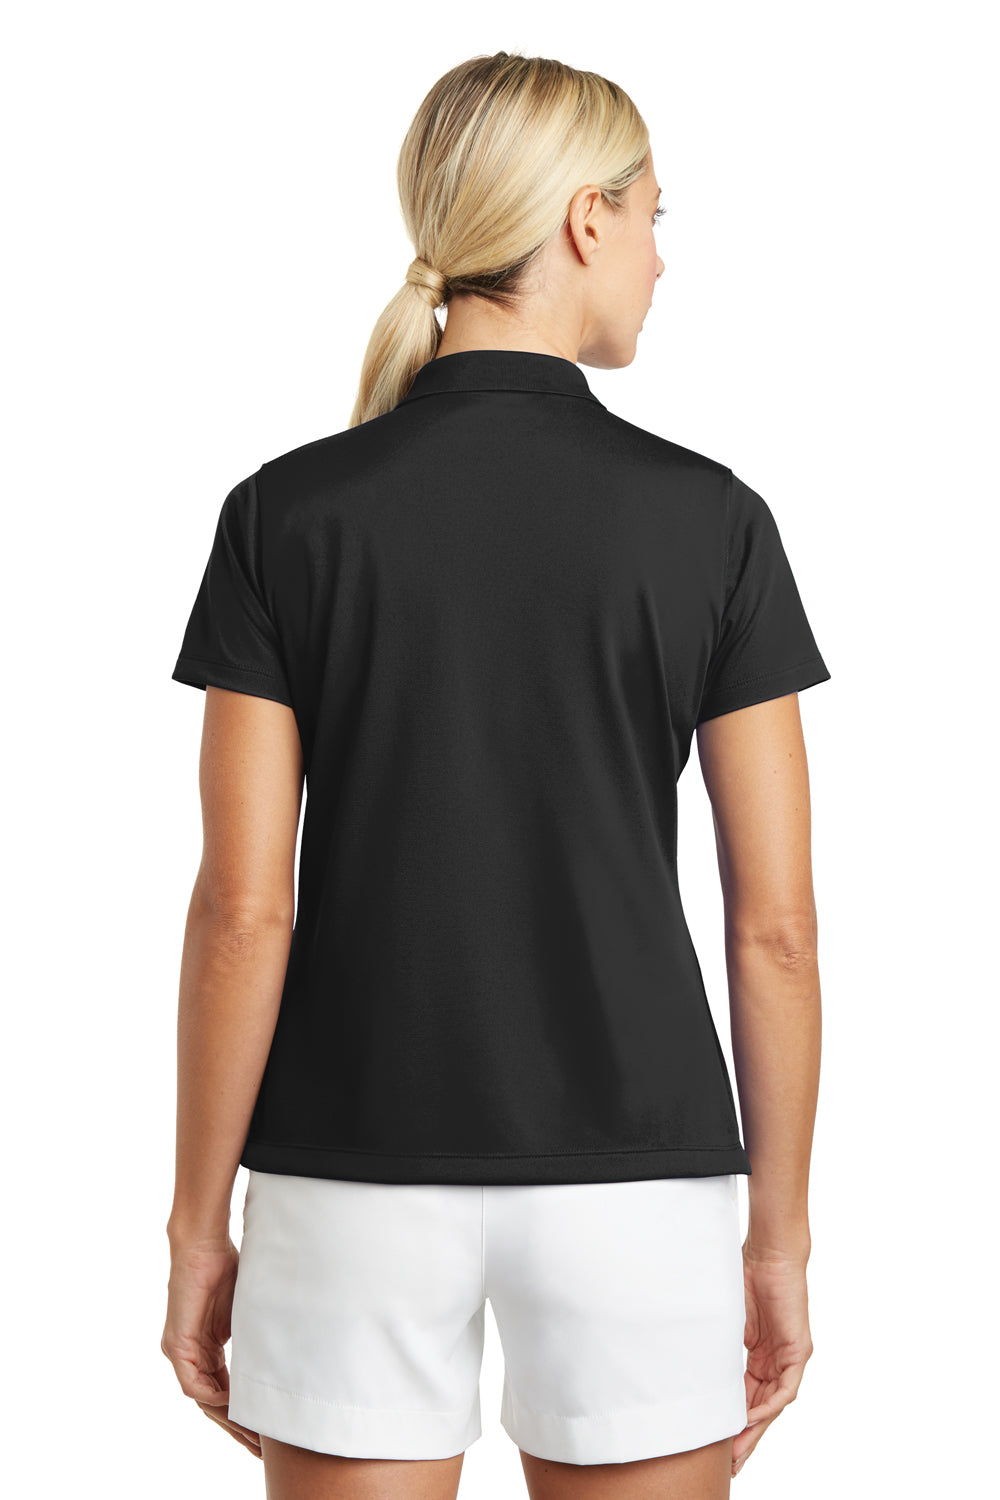 Nike 203697 Womens Tech Basic Dri-Fit Moisture Wicking Short Sleeve Polo Shirt Black Model Back